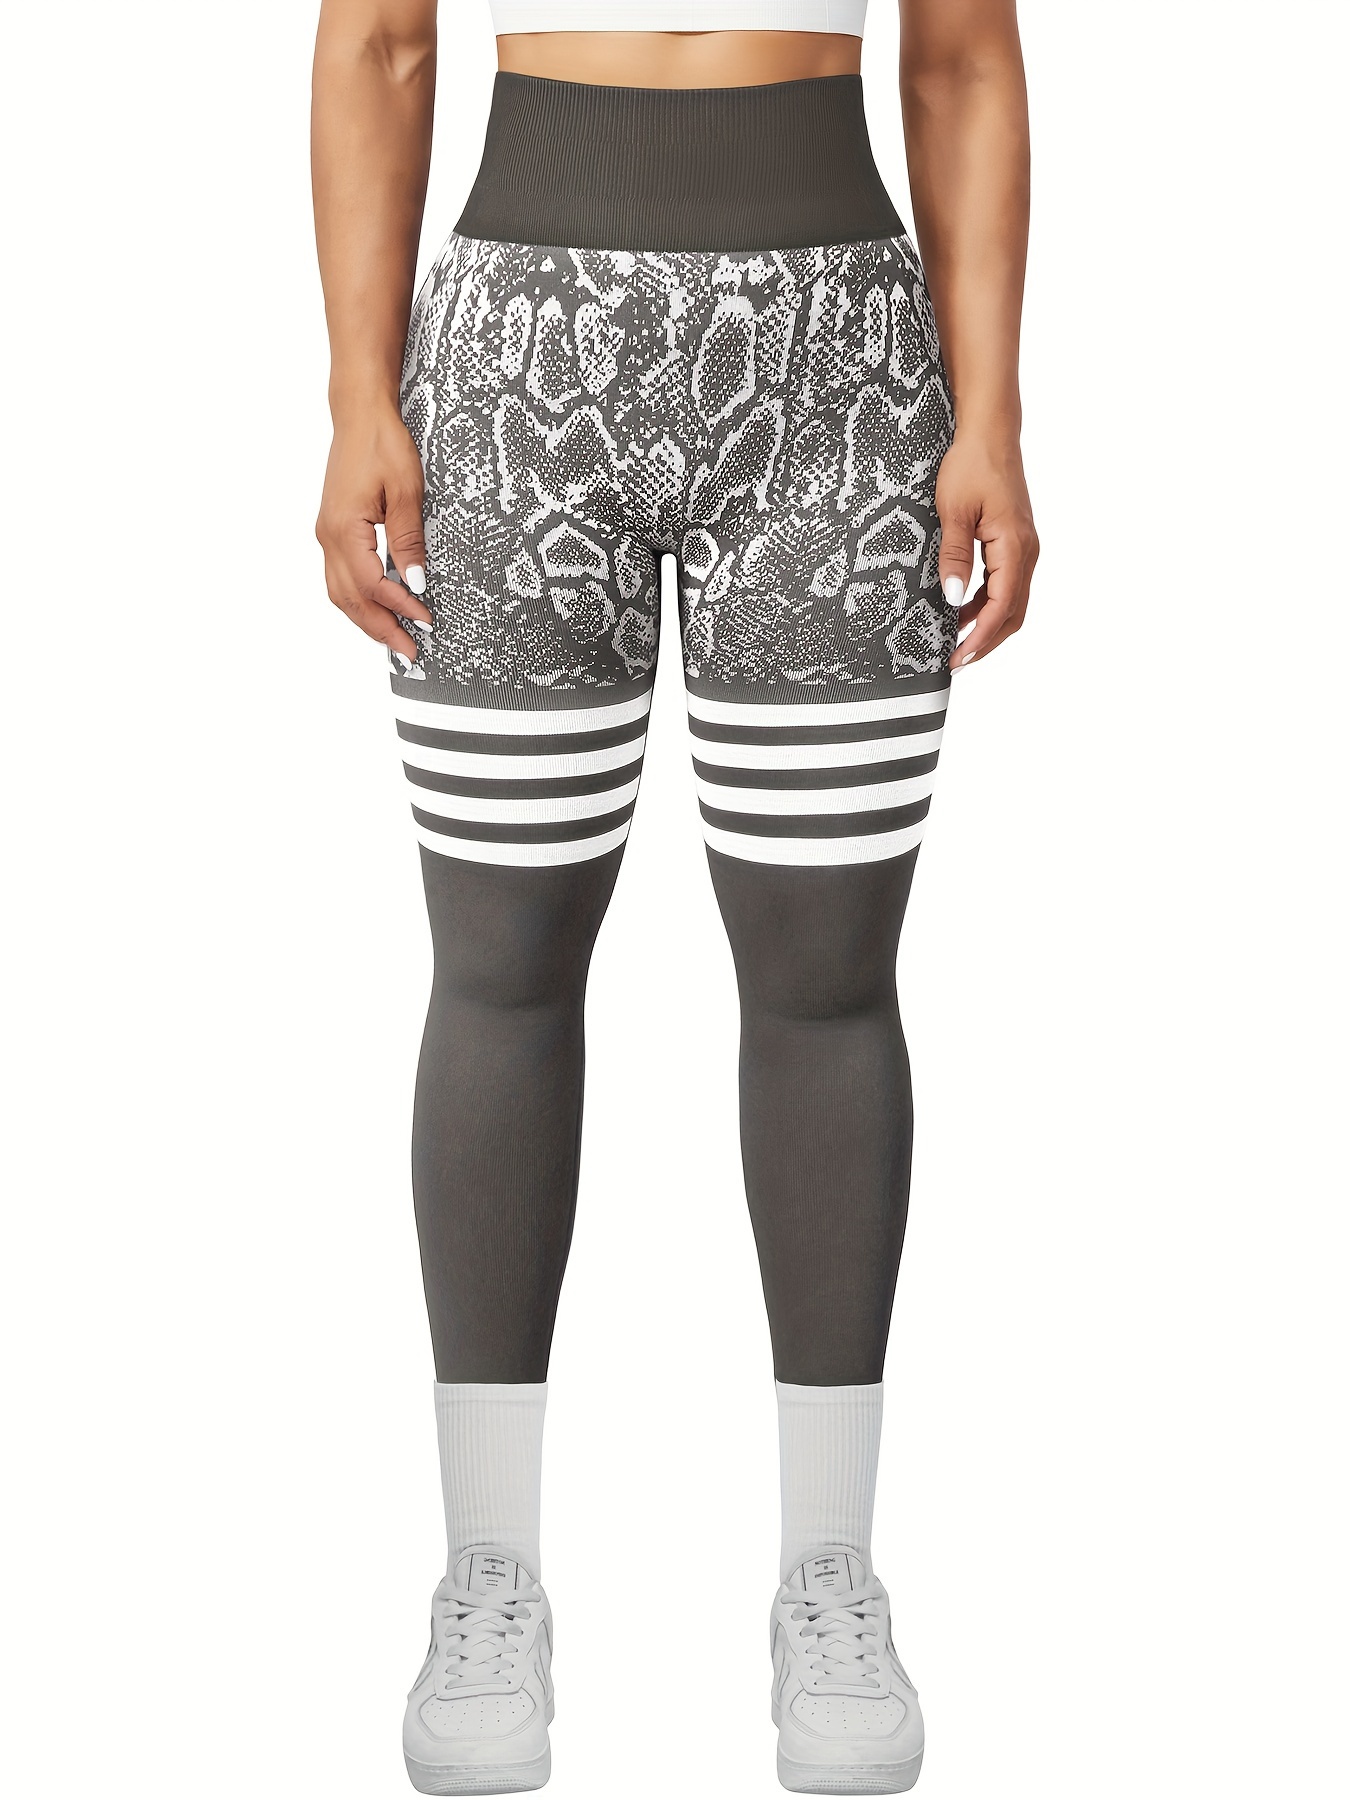 lipkko - Stitched High Waist Matte Leggings Sportswear Yoga Pants Pilates -  Codibook.